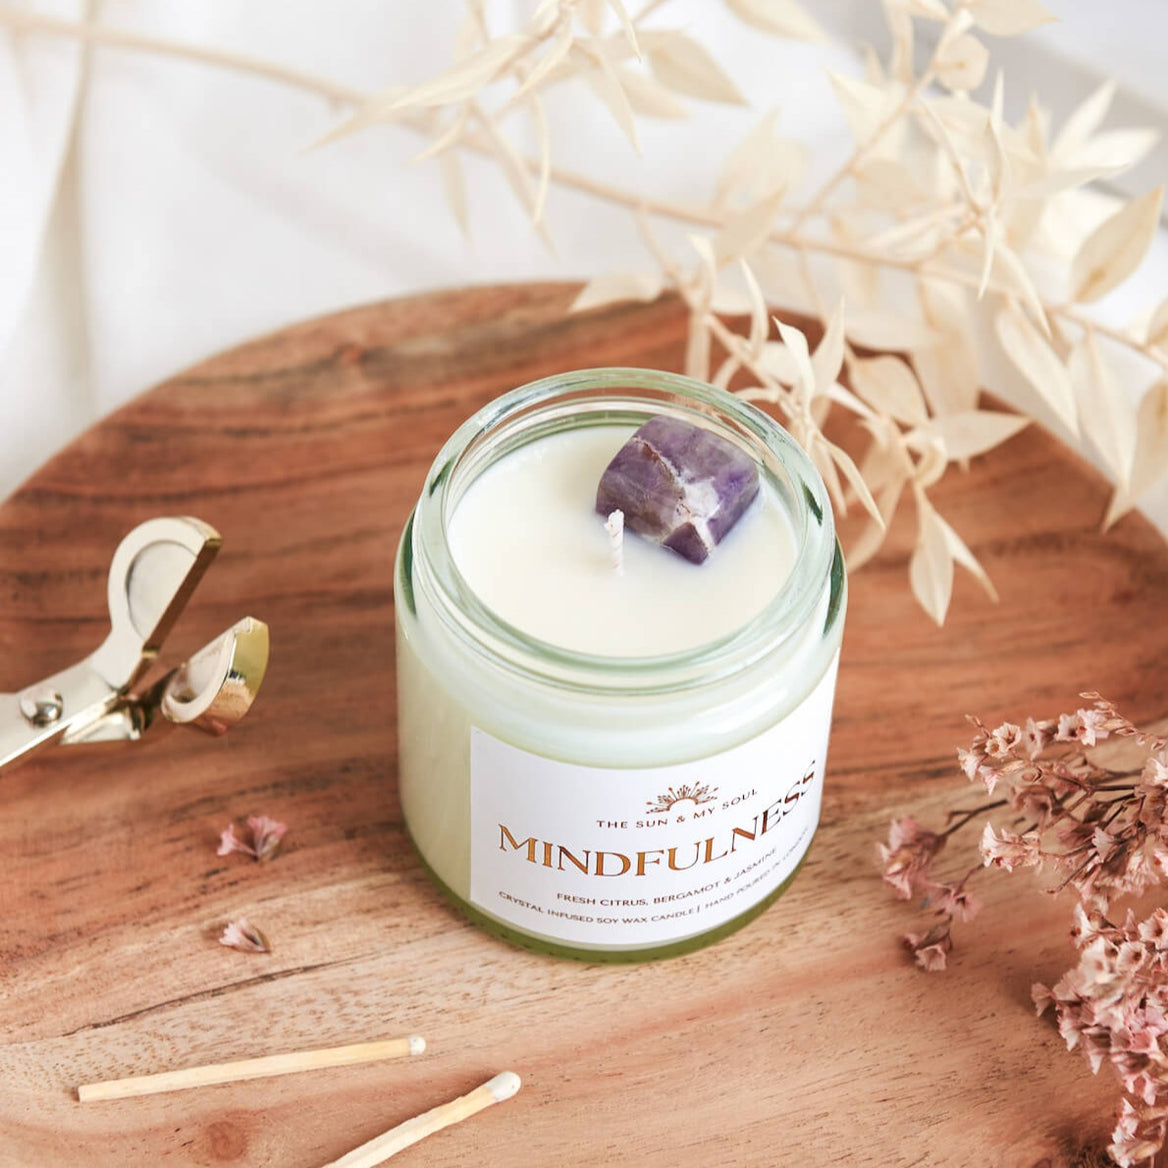 Mindfulness Crystal Candle with Amethyst, Scent - Fresh Citrus, Bergamot & Jasmine